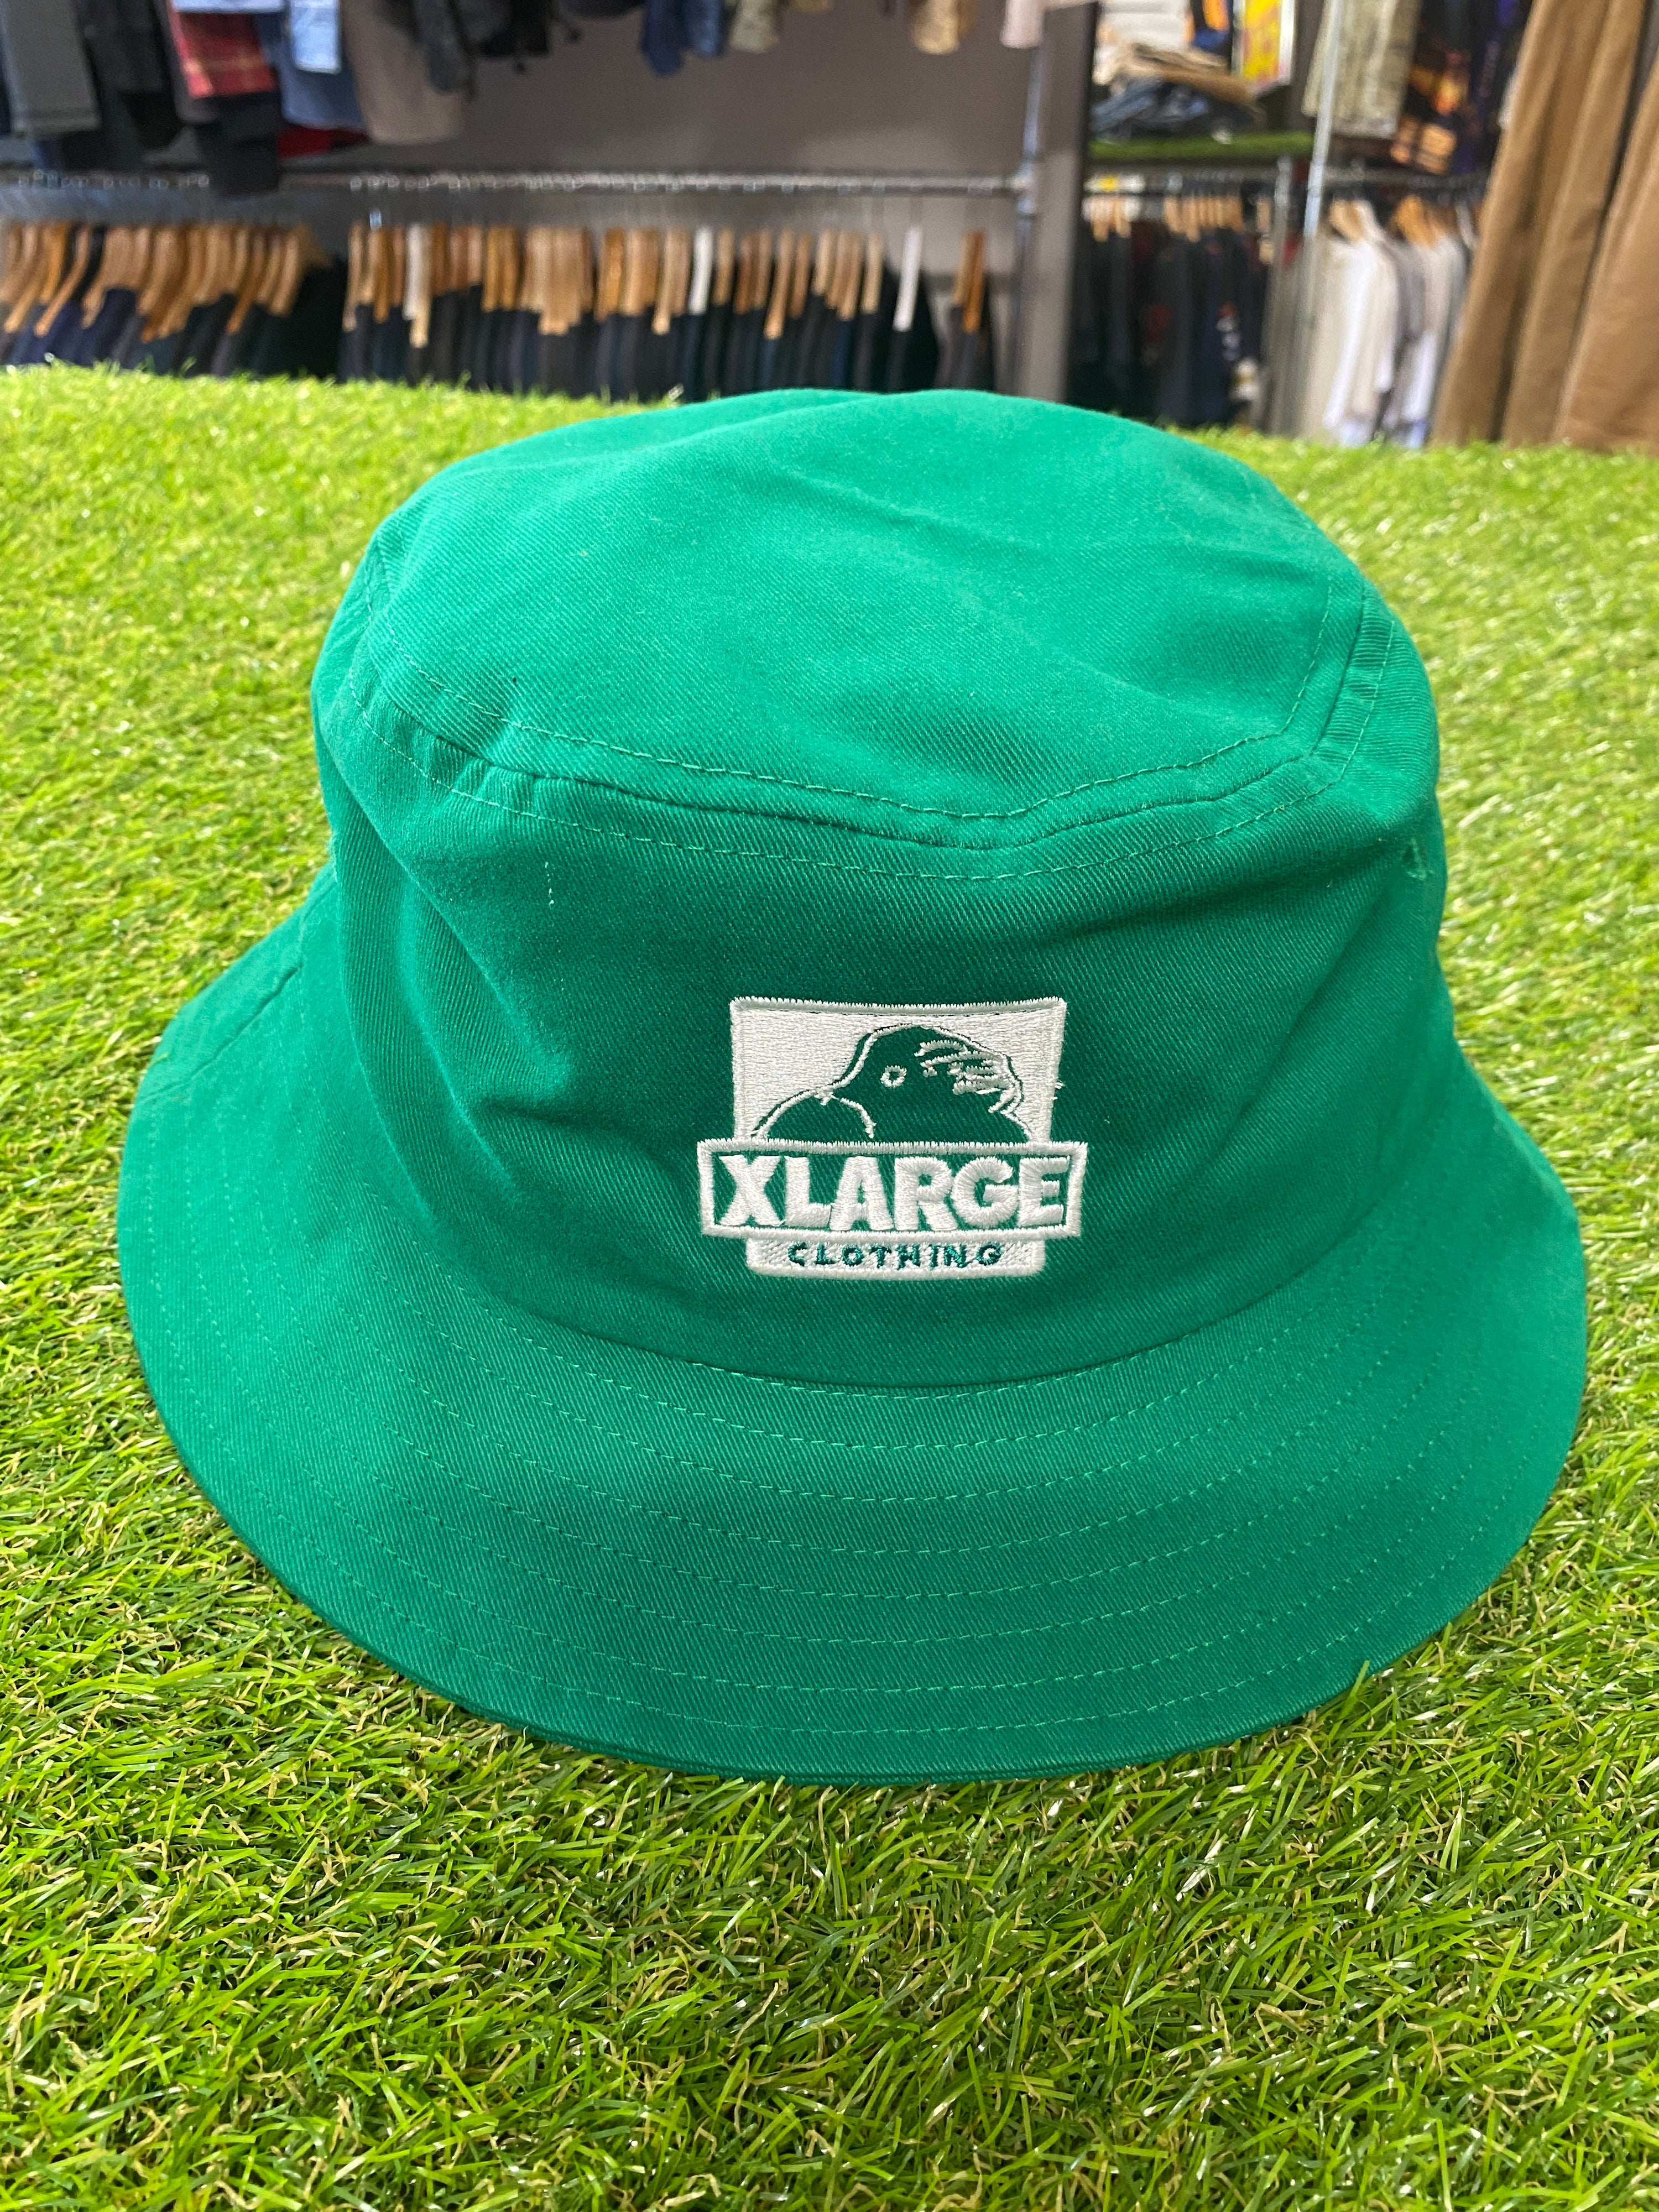 XLARGE Clothing Green Bucket Hat